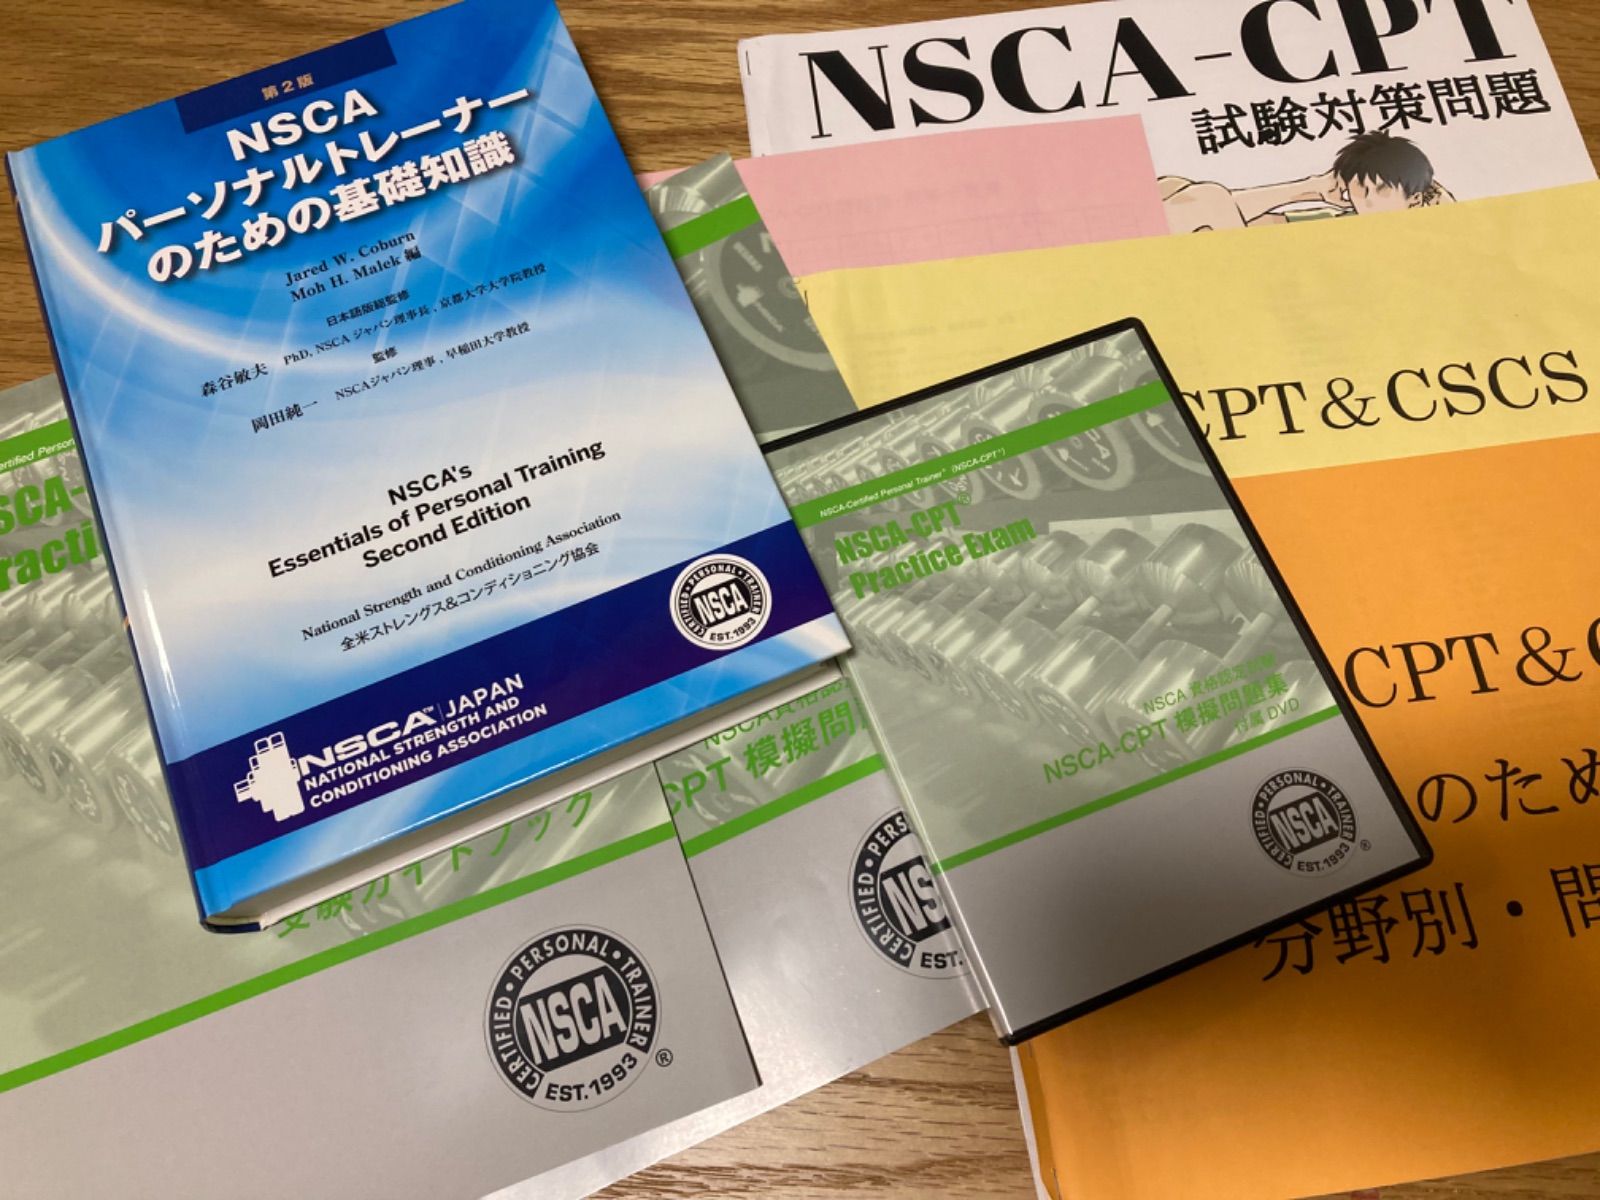 NSCAパーソナルトレーナーのための基礎知識 問題集 DVD-